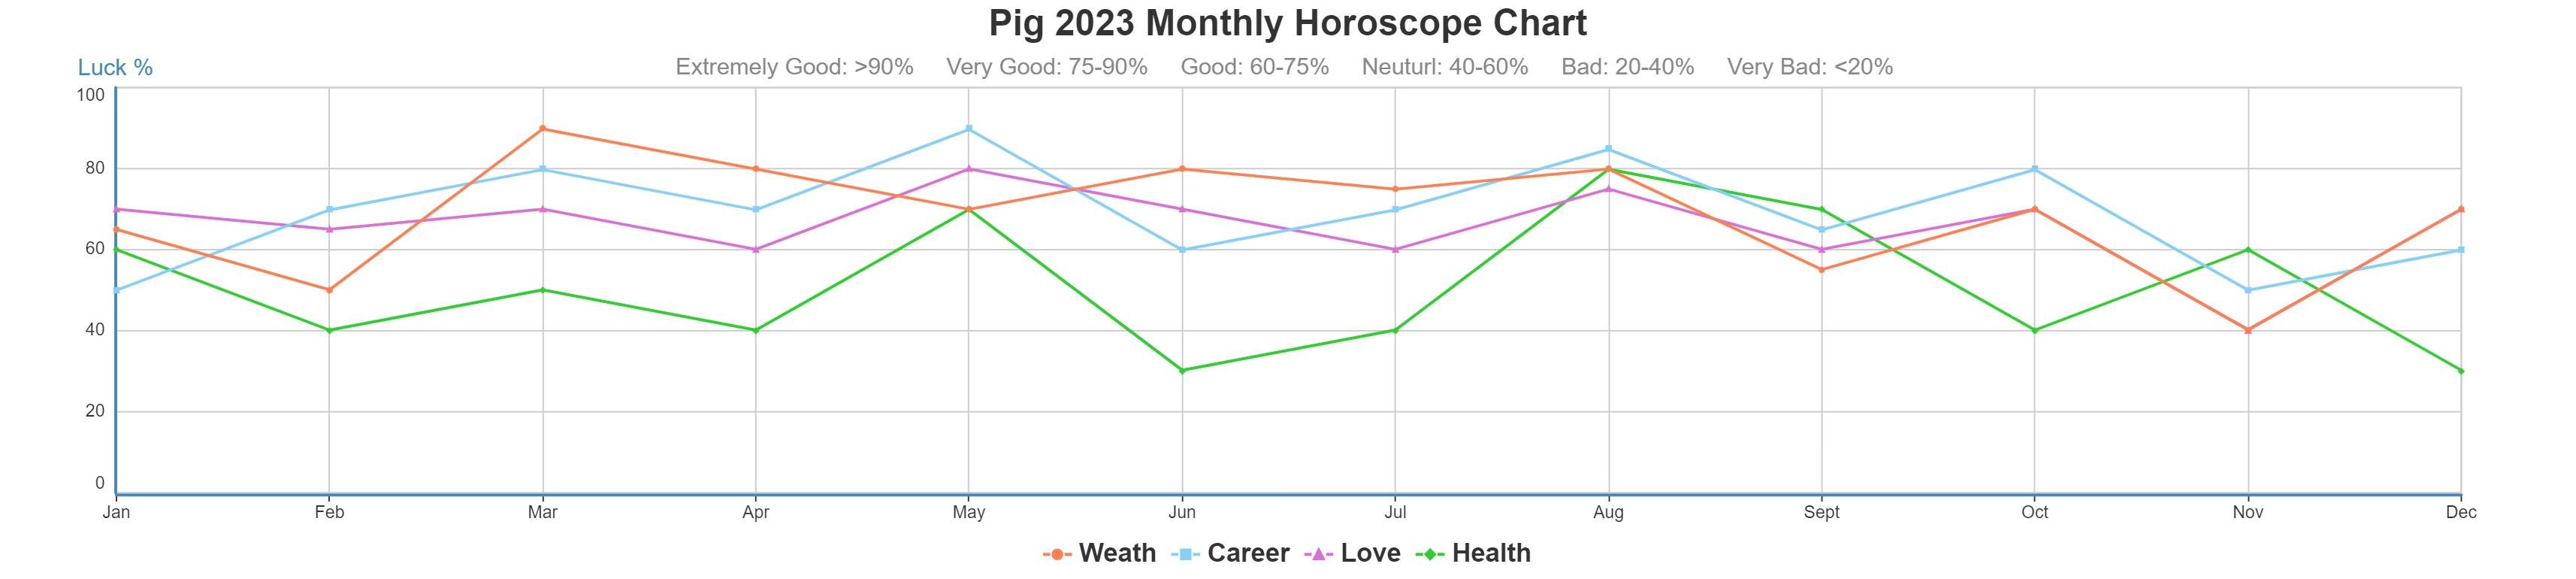 Pig 2023 monthly horoscope